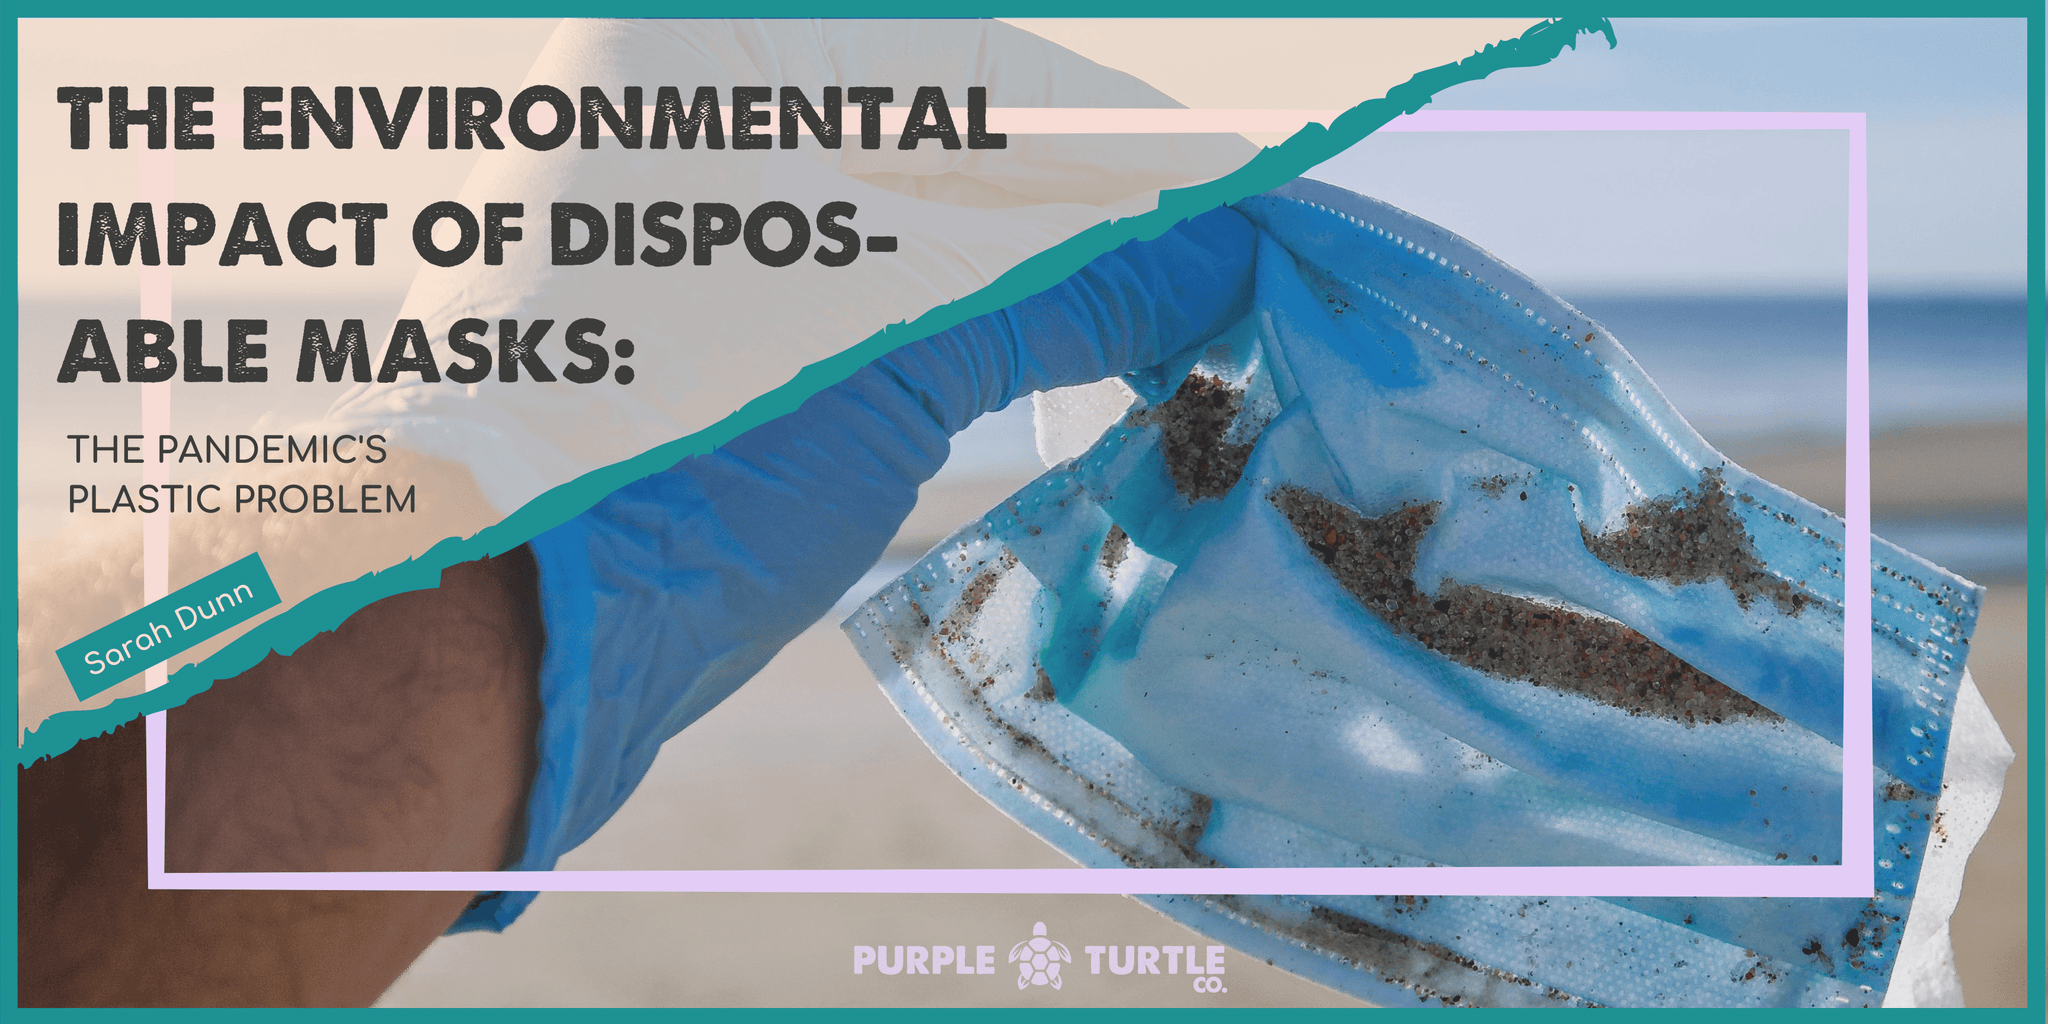 The environmental impact of disposable masks